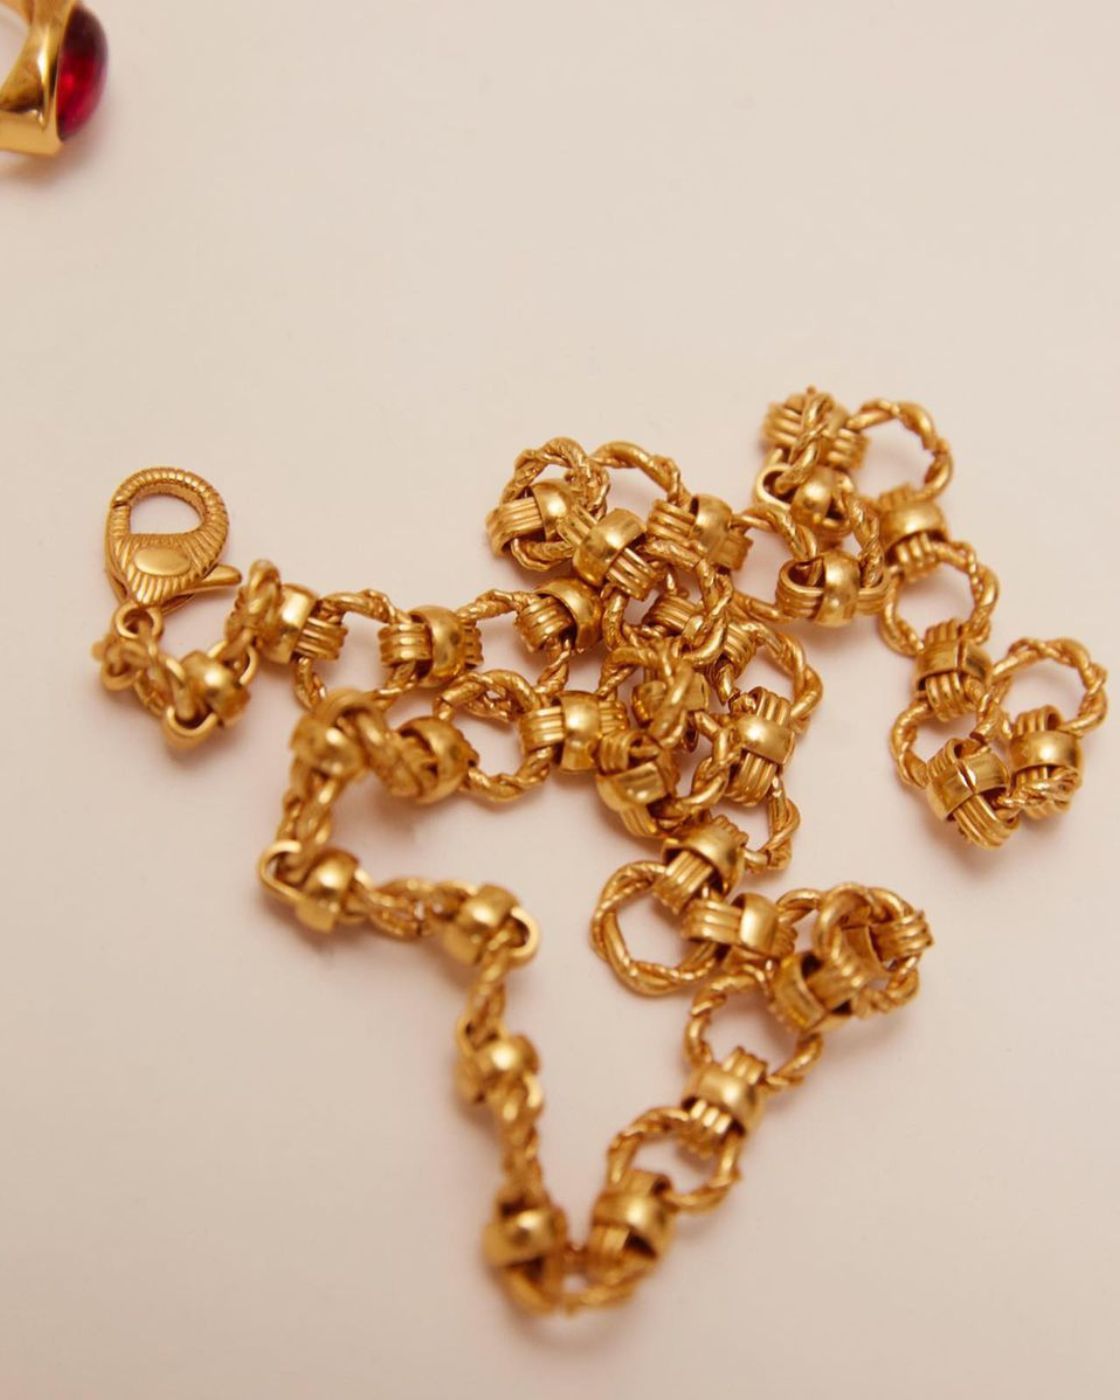 Venezianische vergoldete Halskette